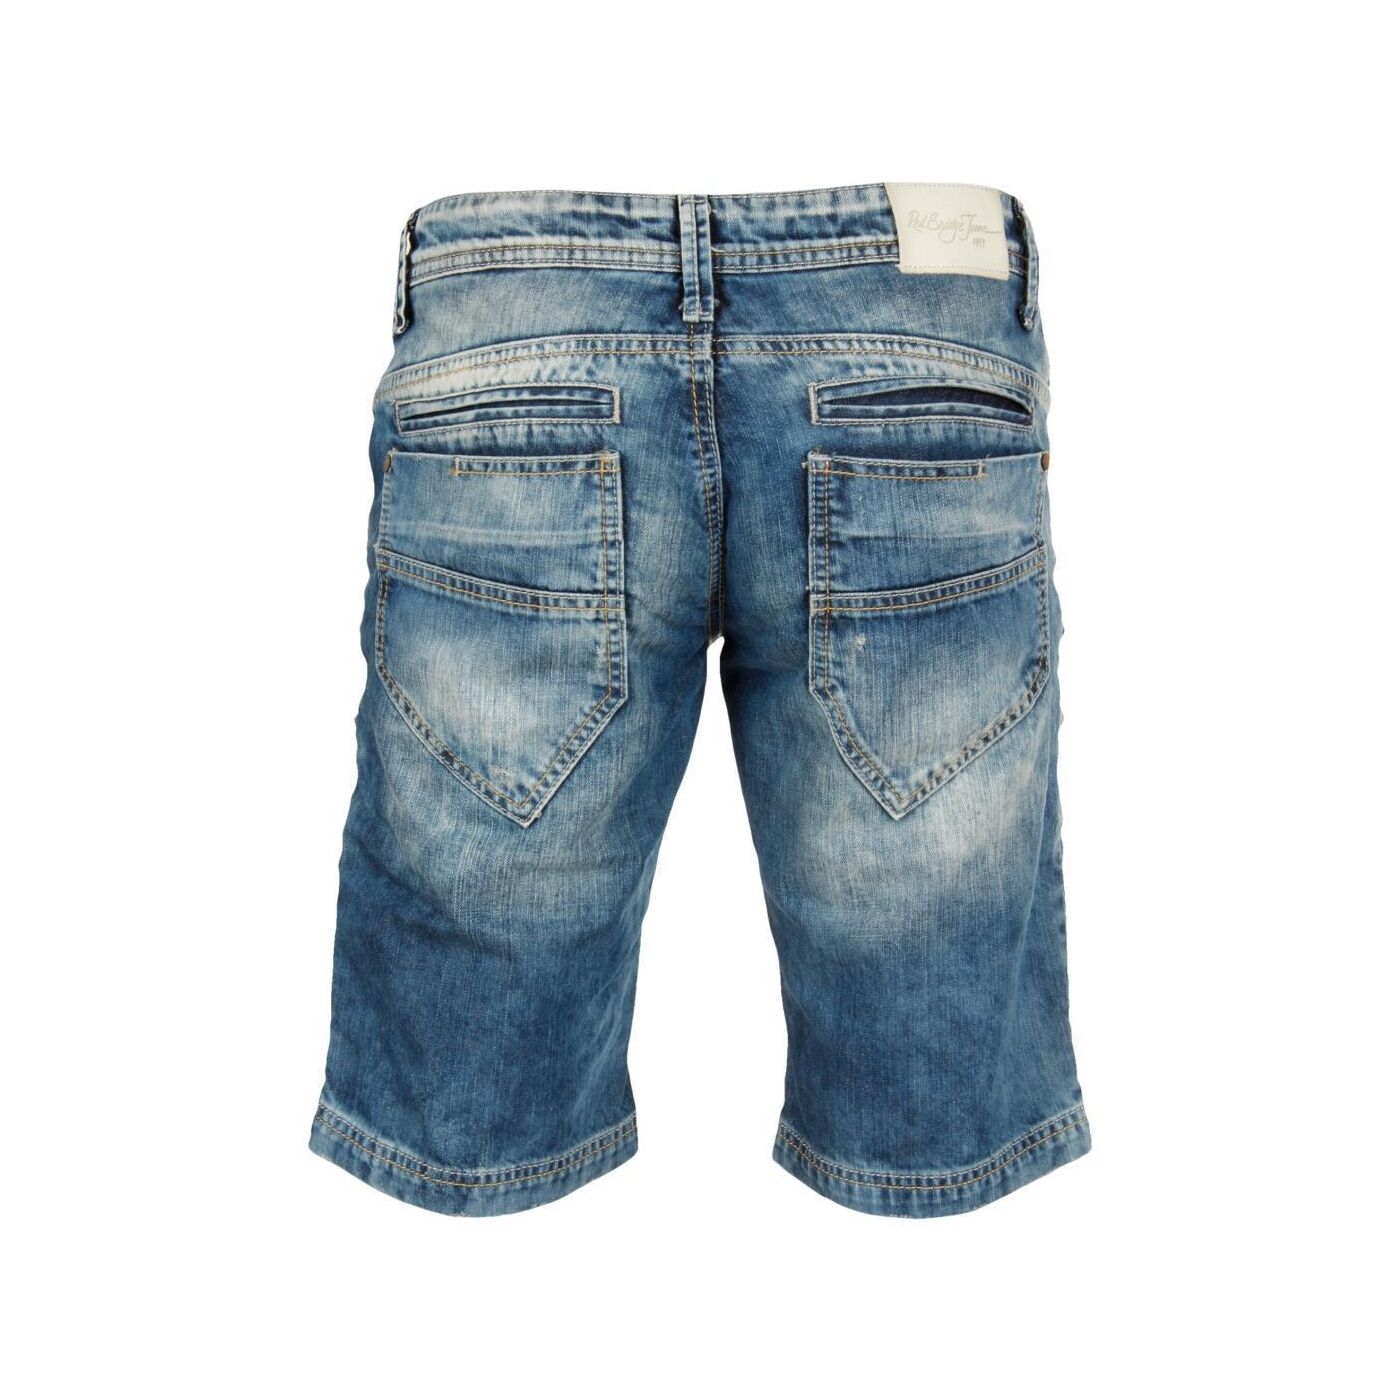 Keep pant Back - blue-R-31151-denim Shorts Jeans 29,90 Red € Bridge Men Redbr,